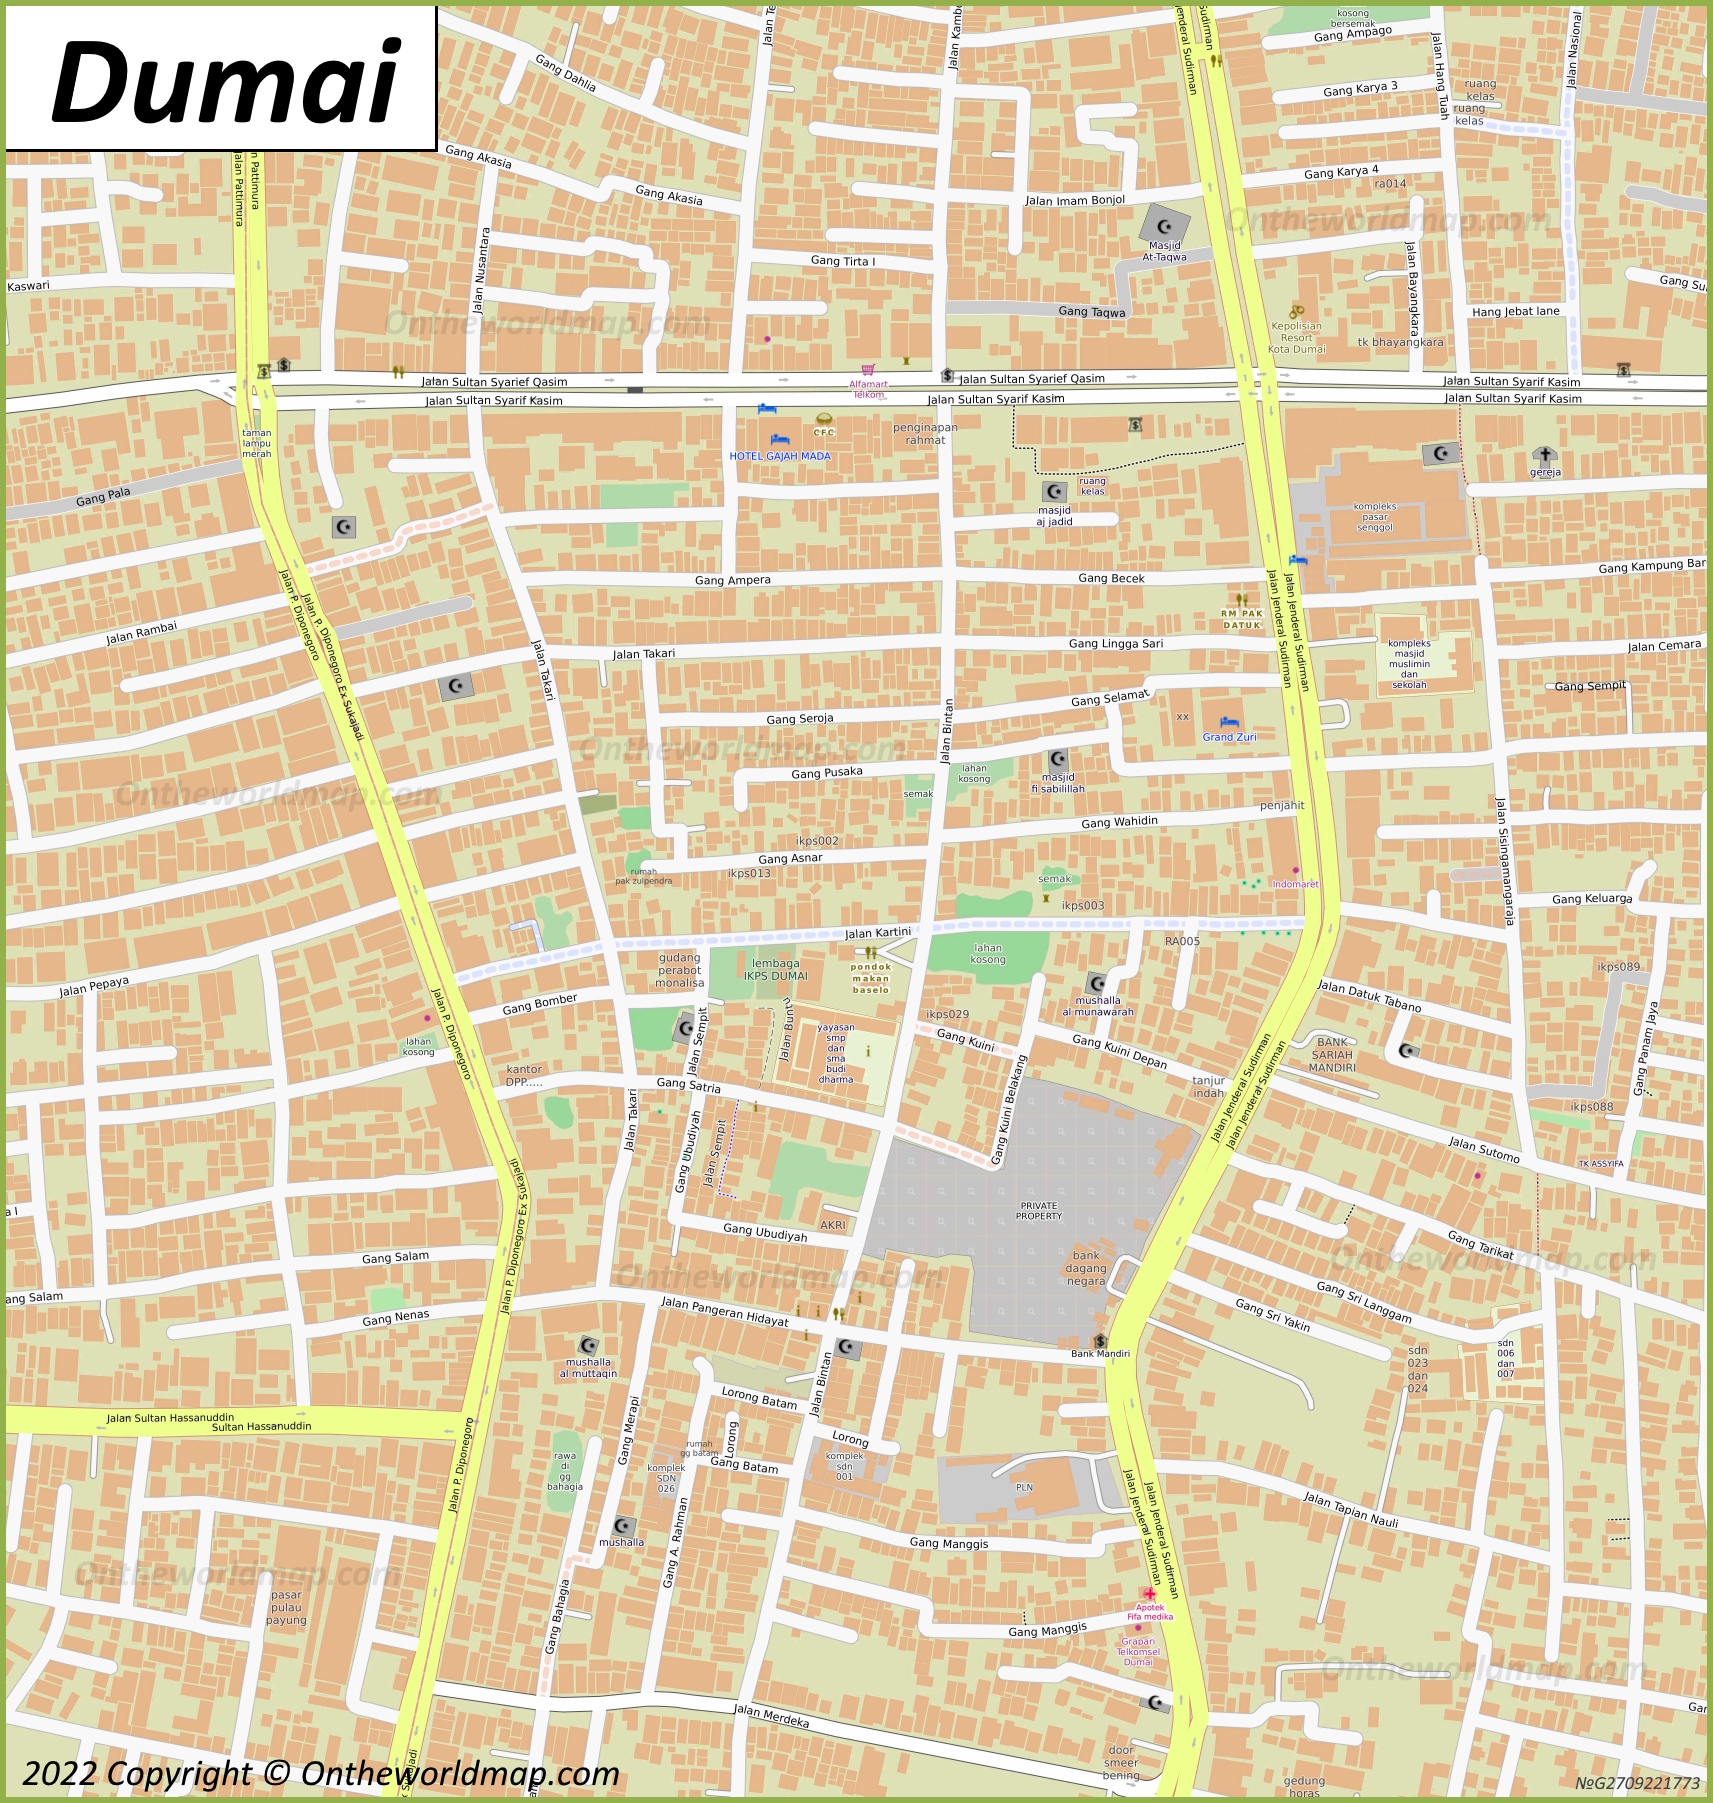 Dumai City Centre Map